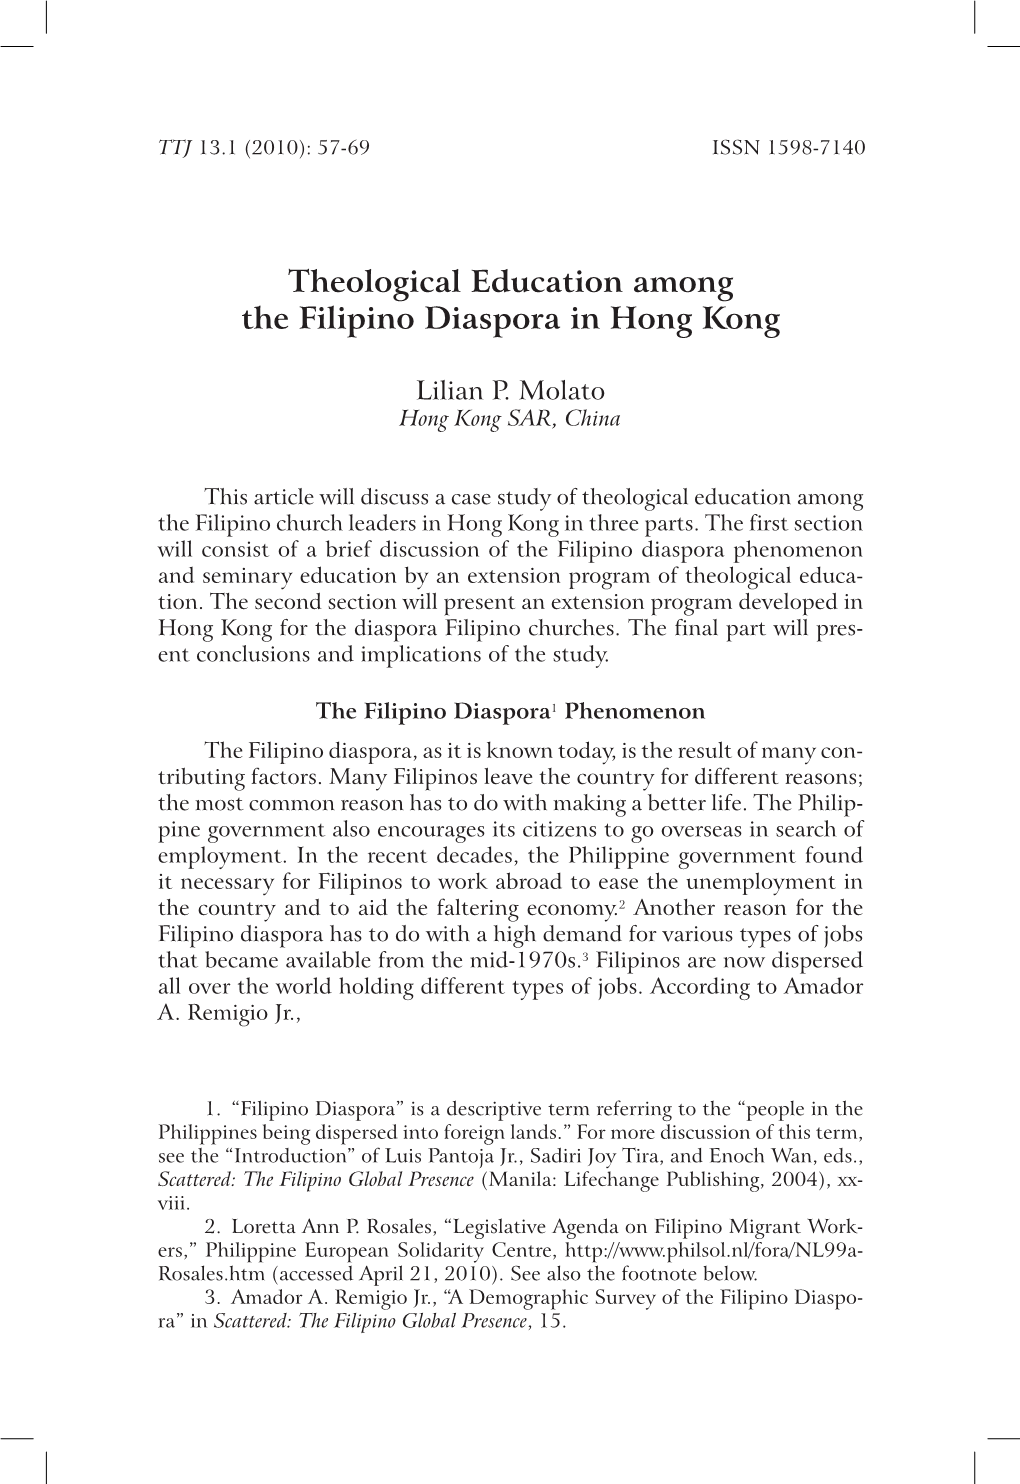 Theological Education Among the Filipino Diaspora in Hong Kong